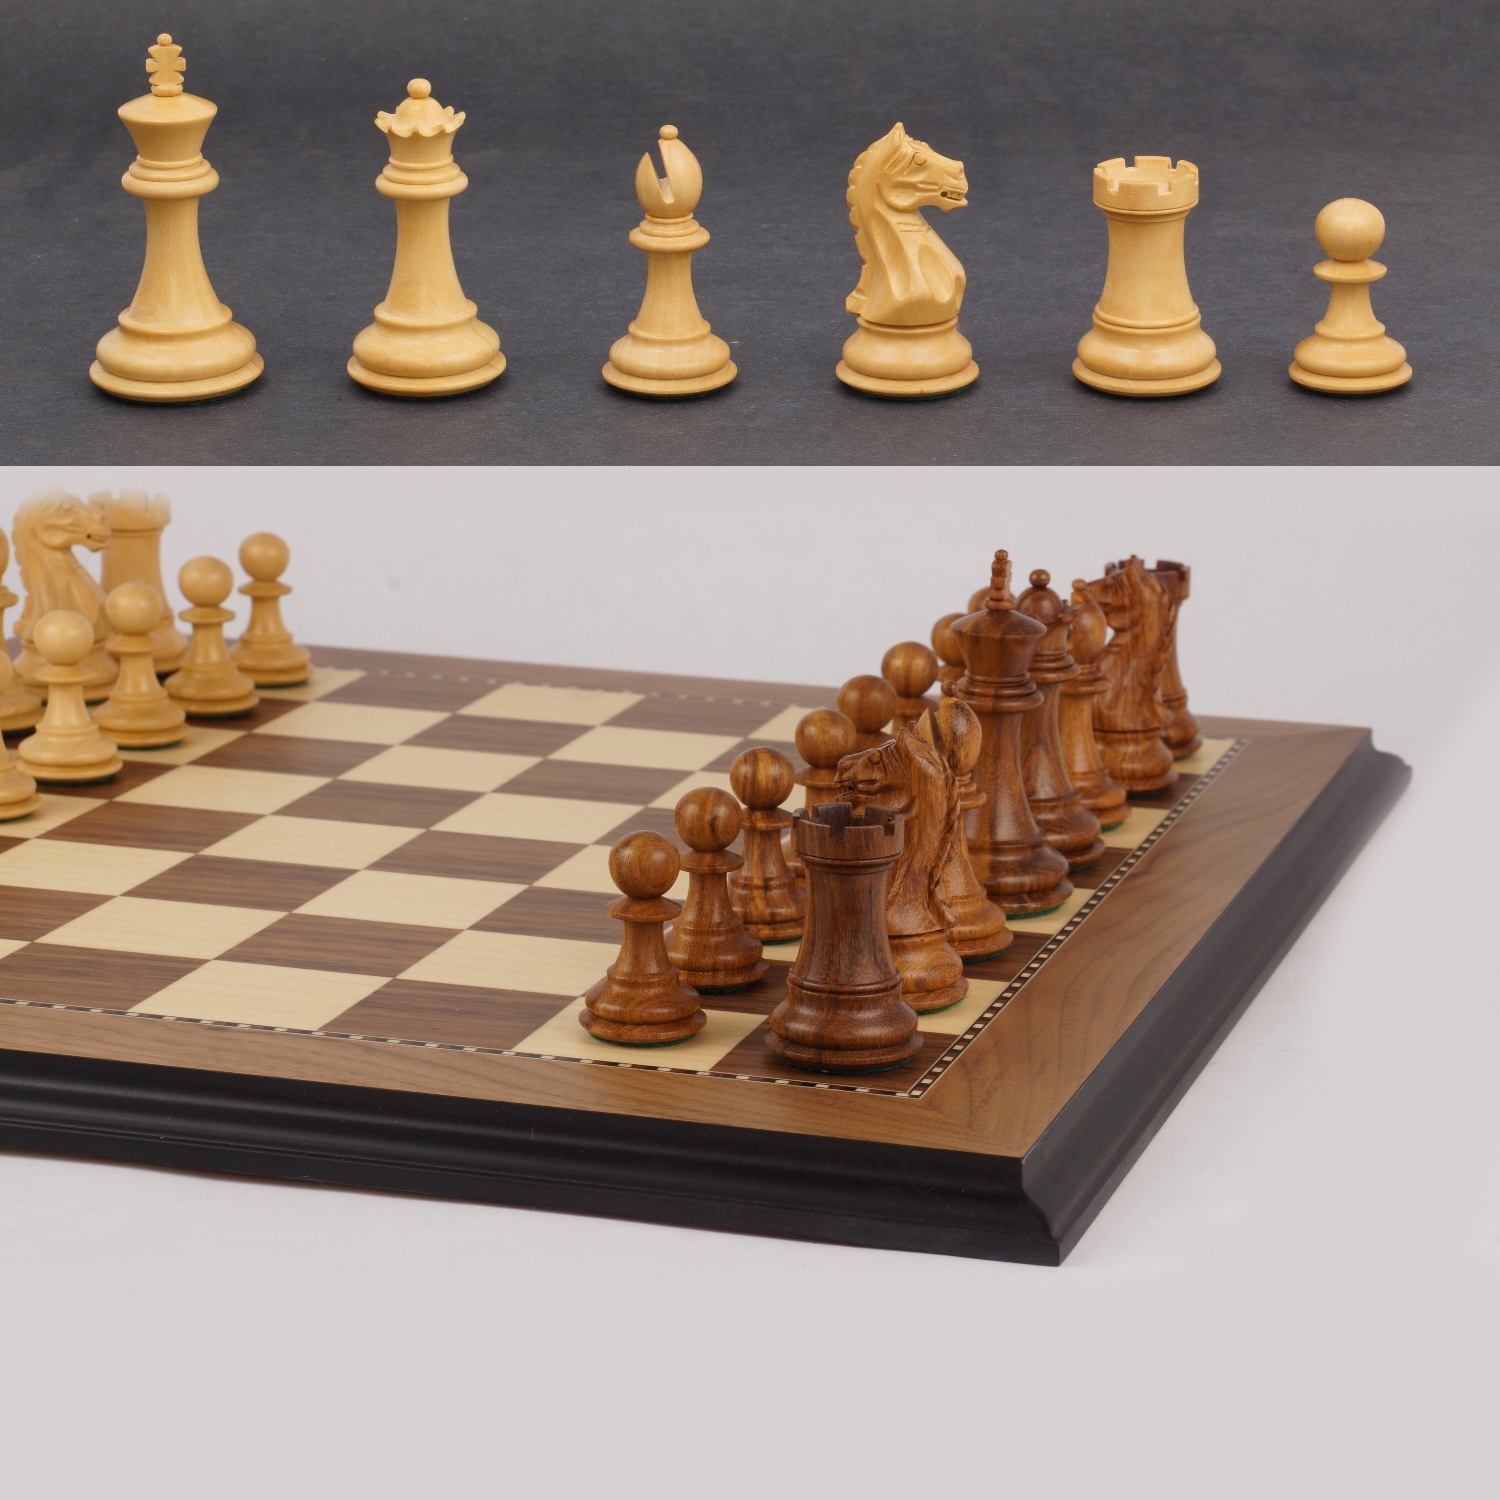 Chess Board Game Brown Felt Bag